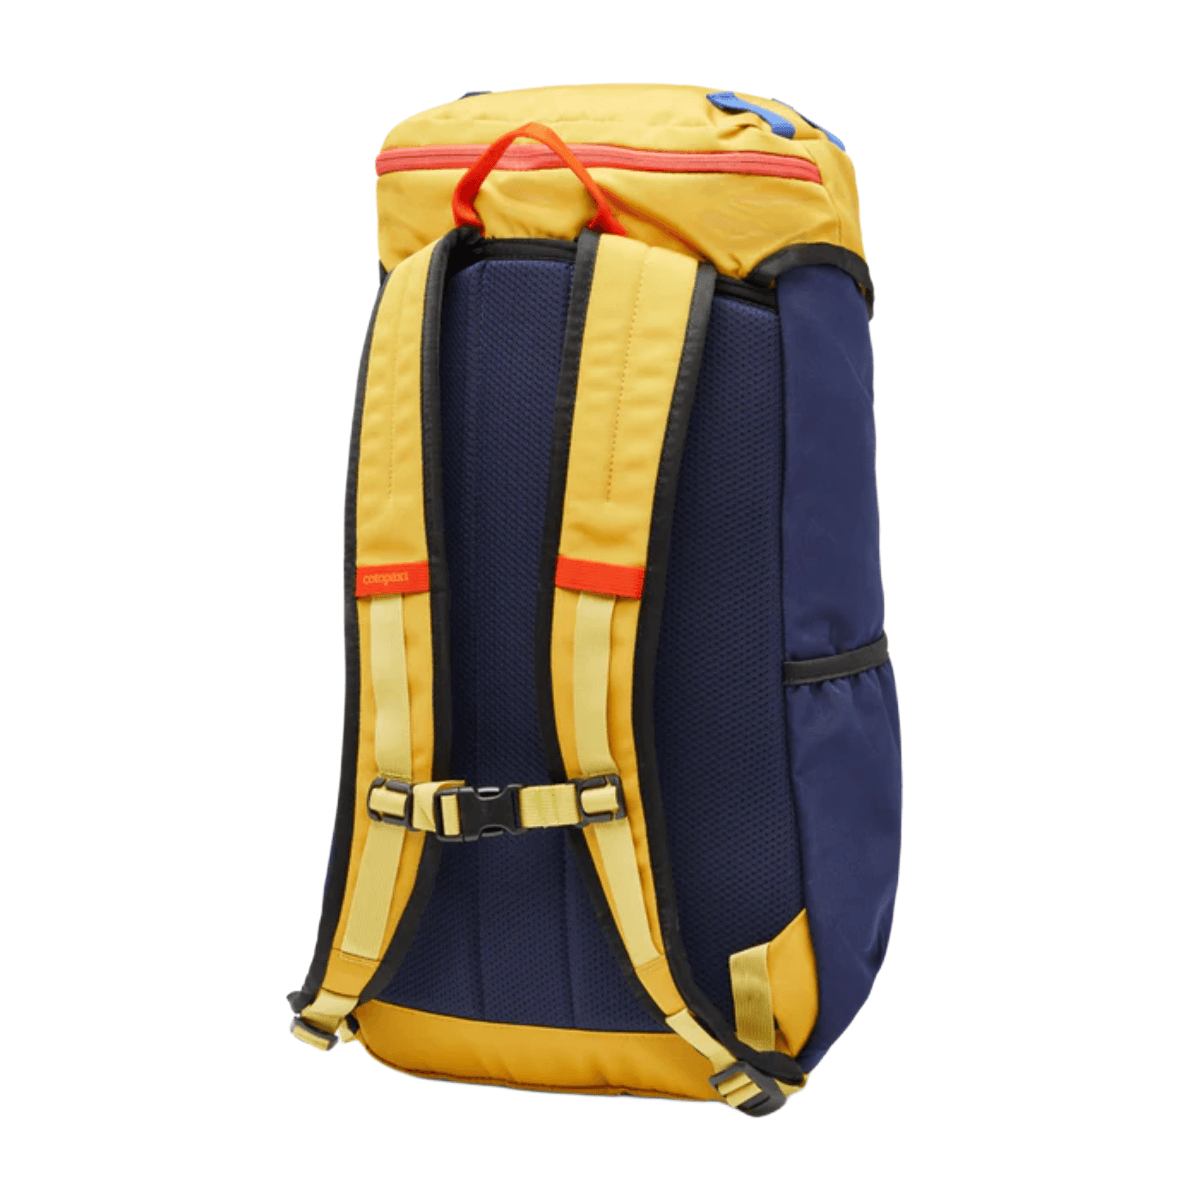 Cotopaxi Tapa 22L Backpack - Bobwards.com